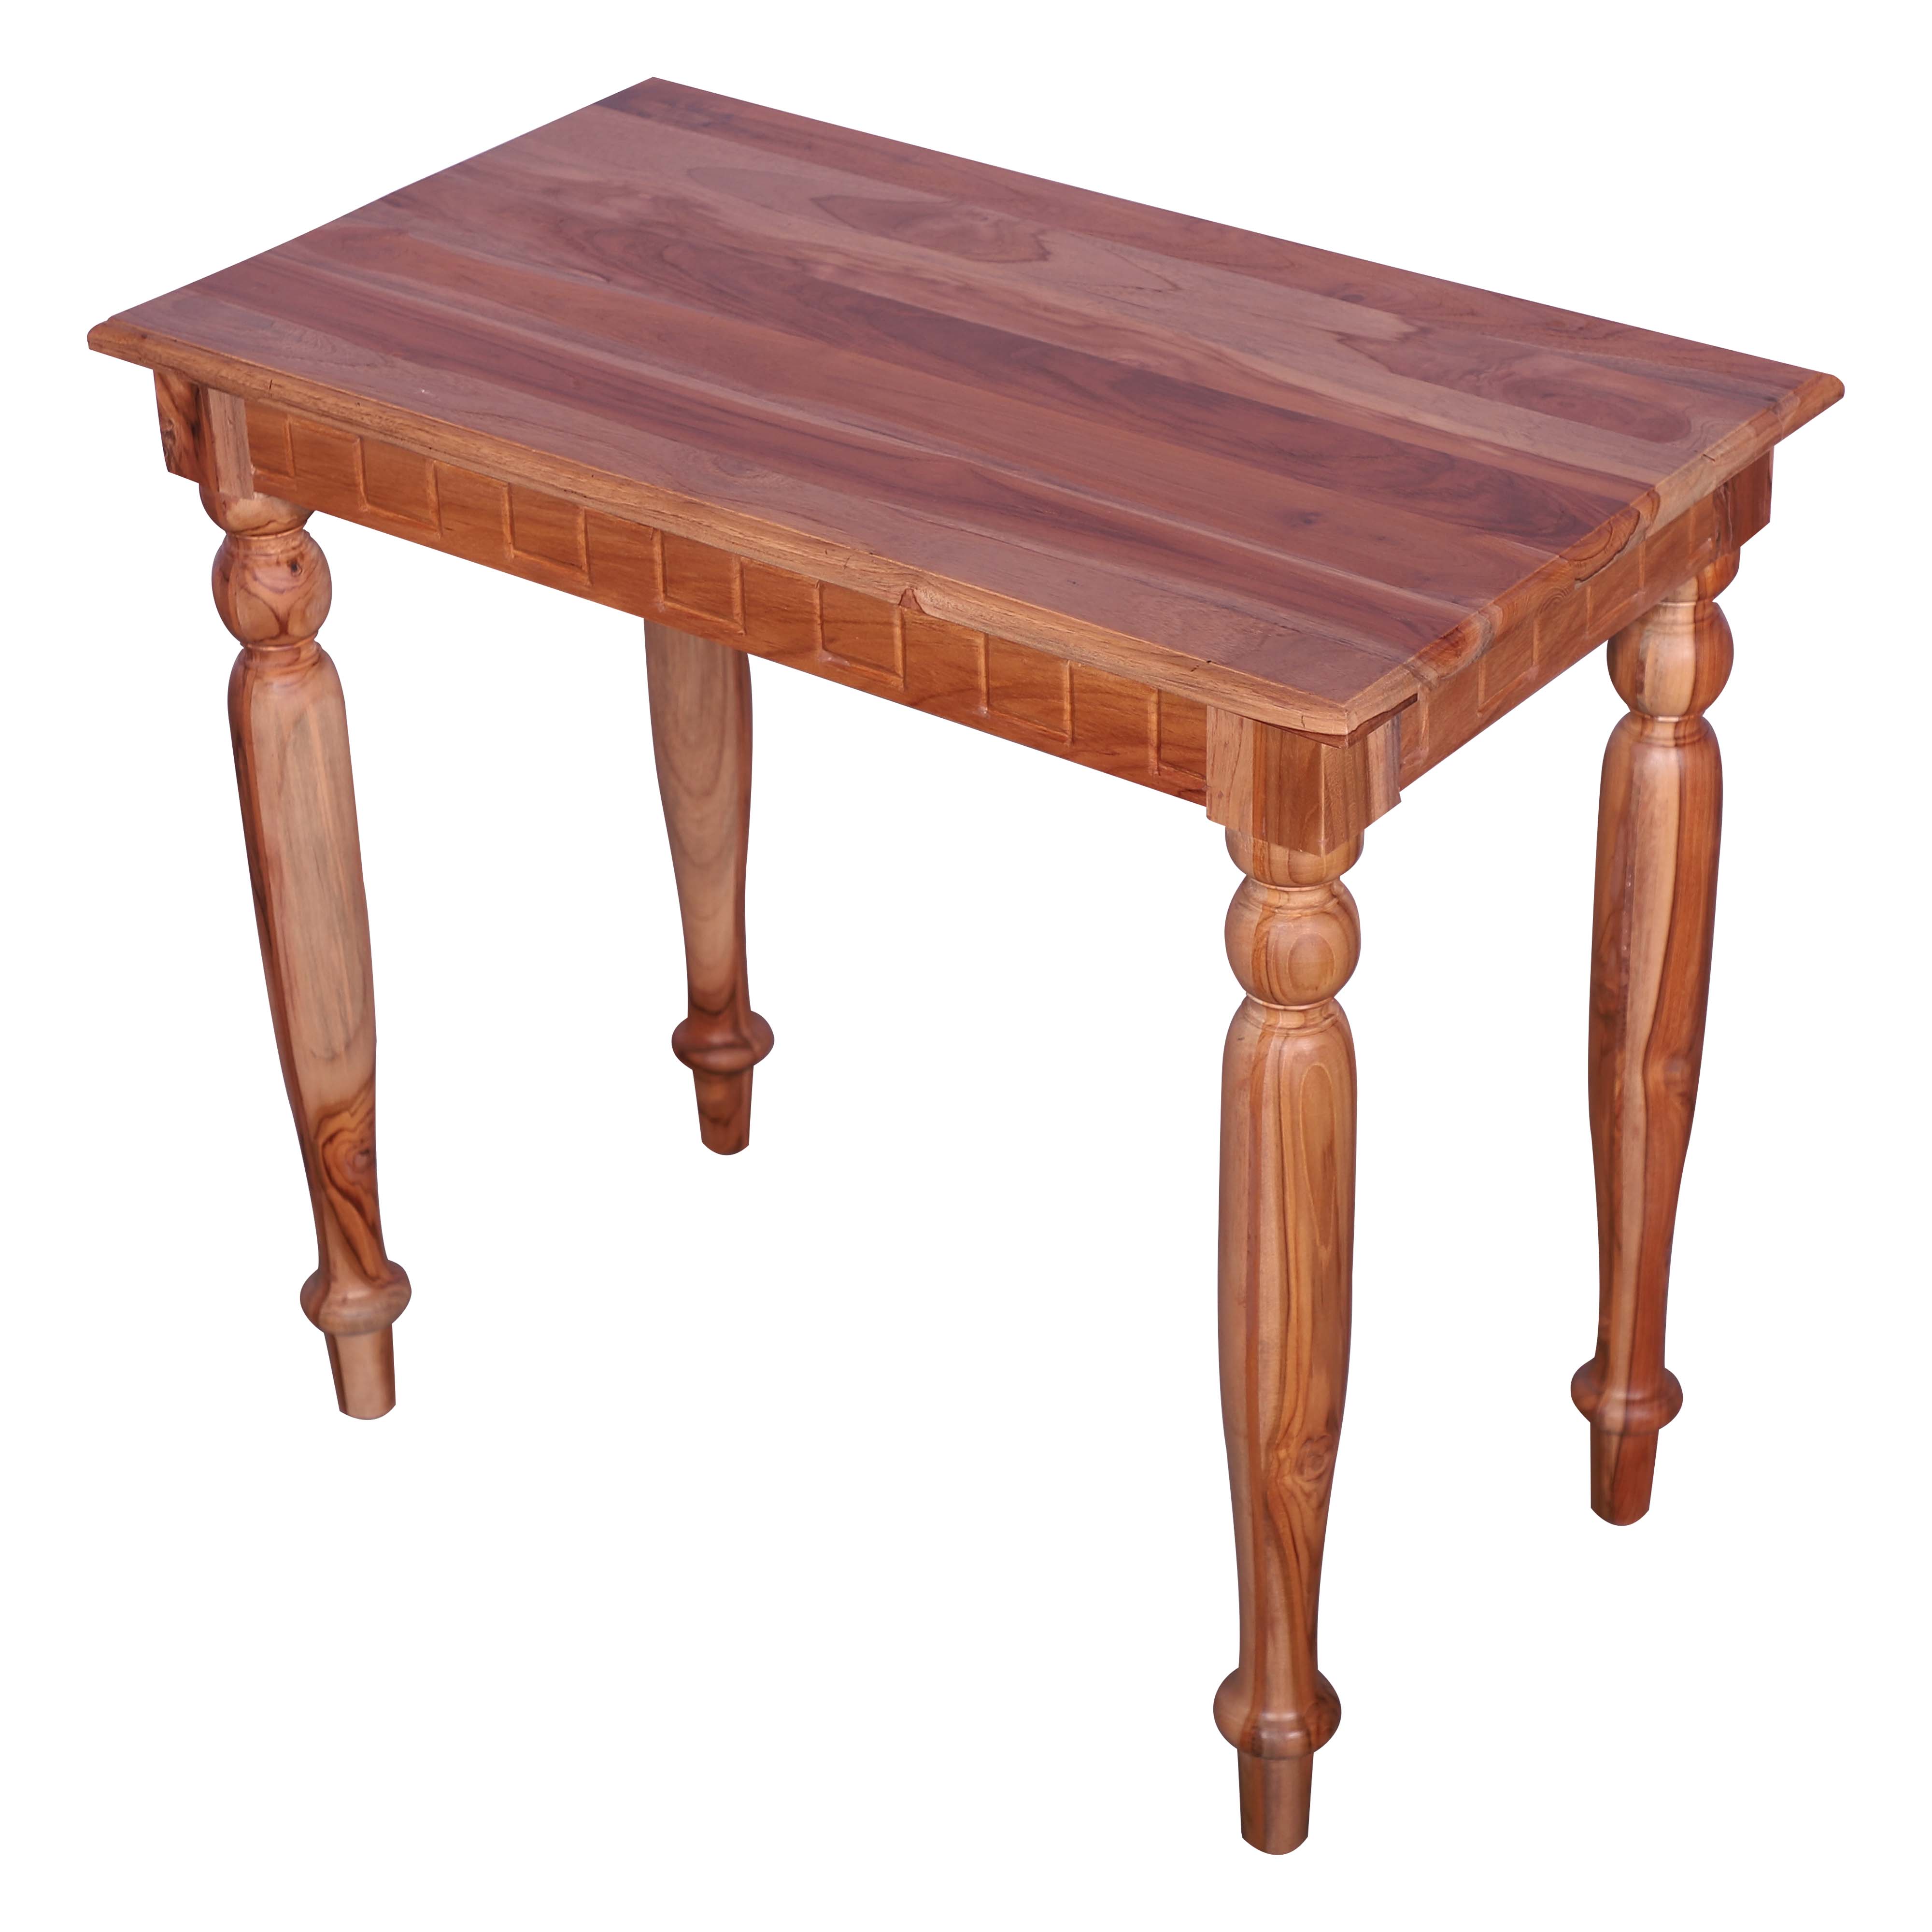 Sagwan wood Classic Study Table Rectangle Shape in Natural wood finish